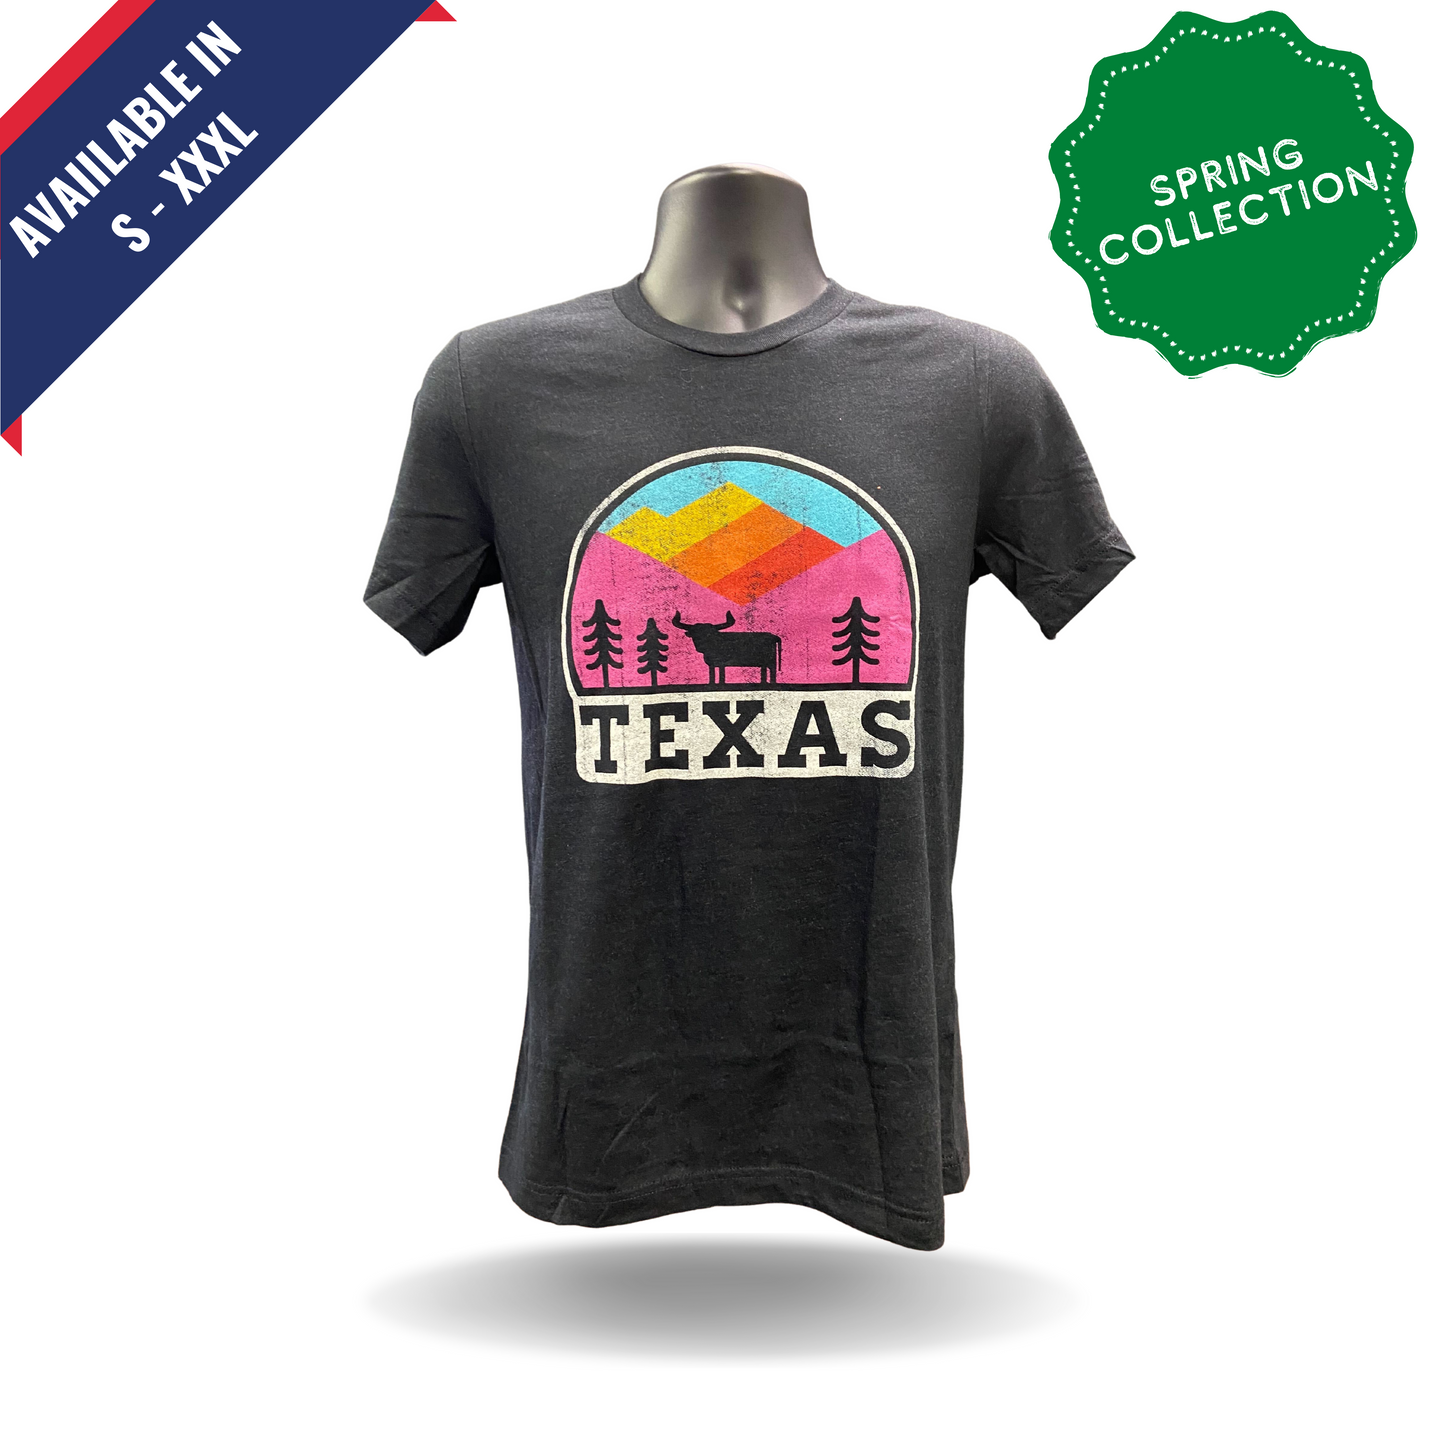 The Texas Sunset Shirt